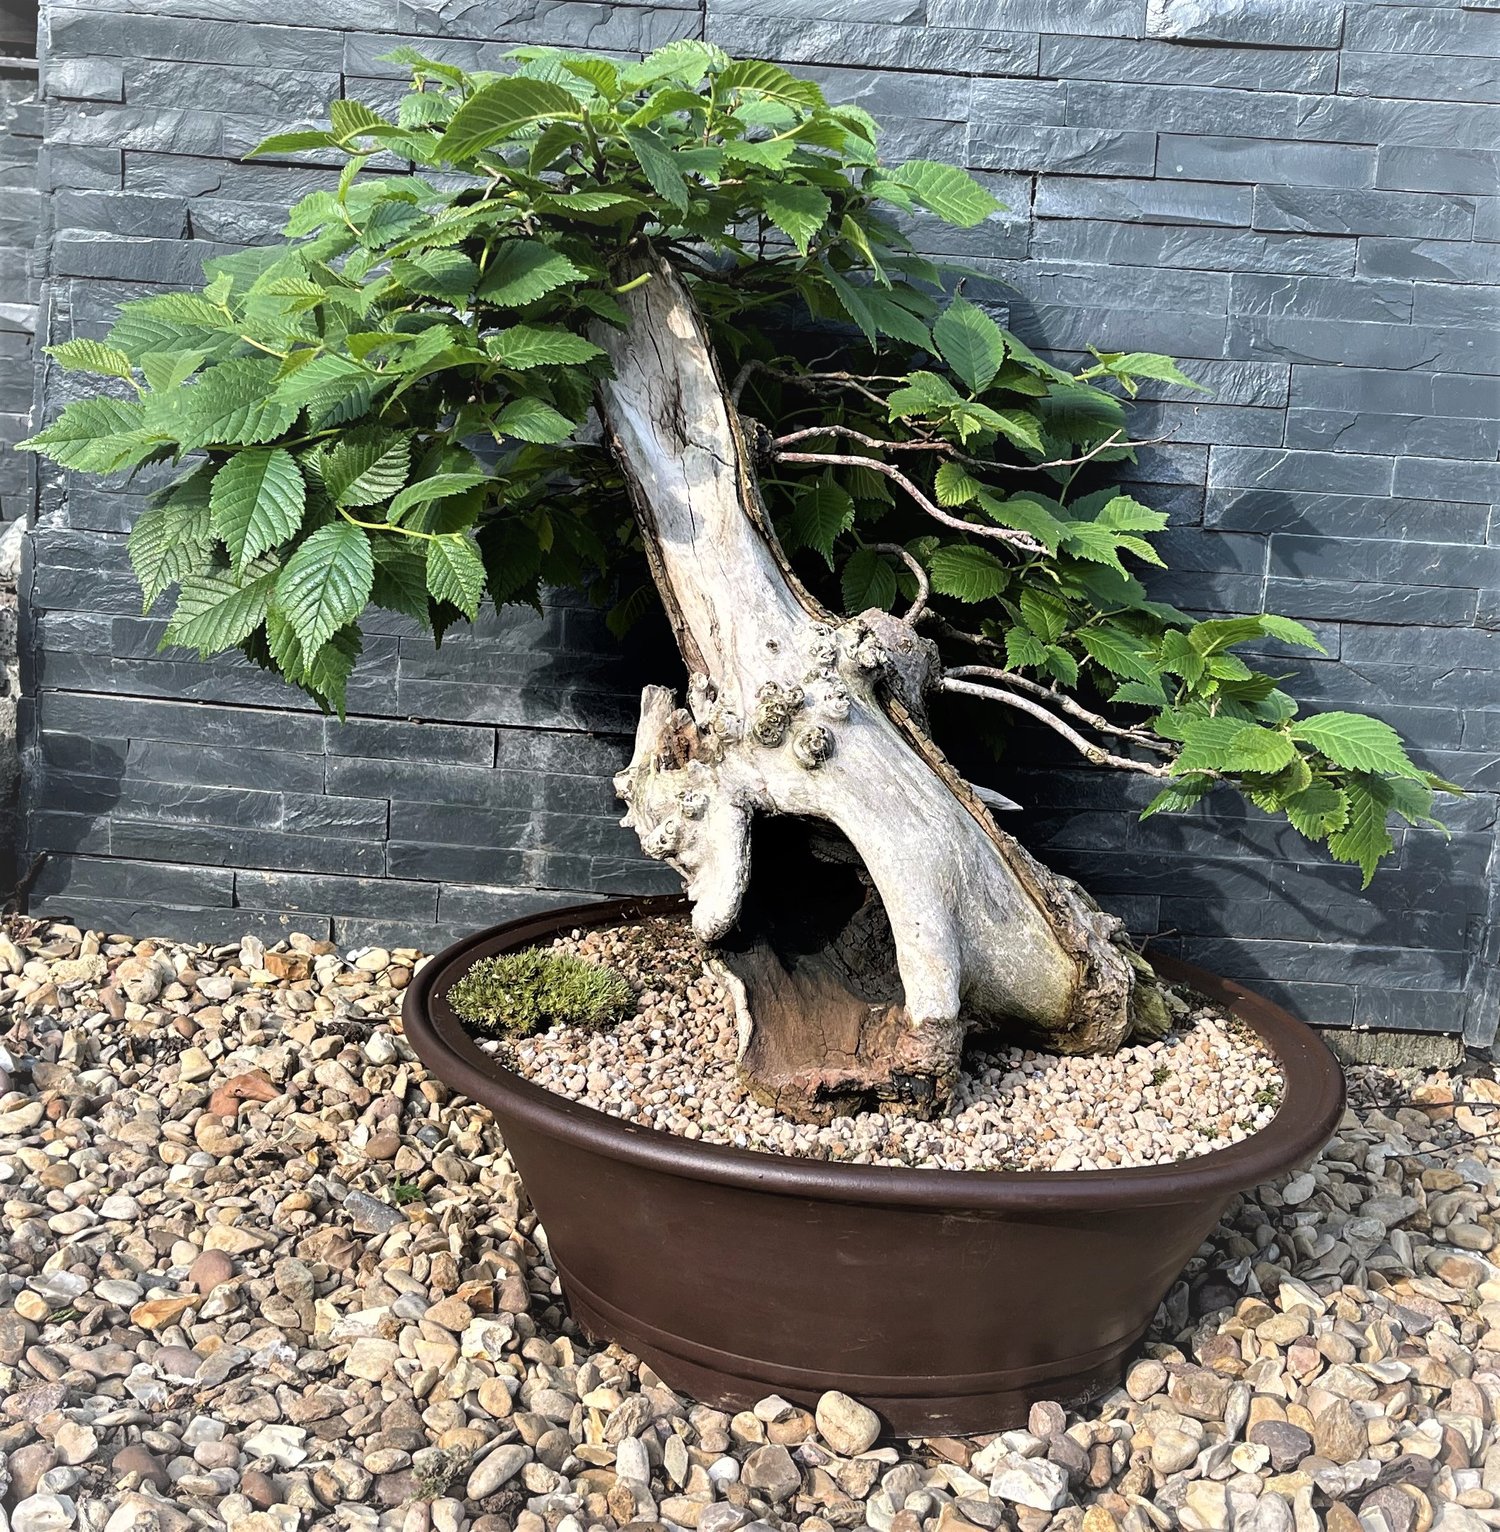 Enchanting English Elm Bonsai Tree with Yamadori Origins, Shari Feature,  and Captivating Hollow Resembling a Face — GG Evergreen Bonsai